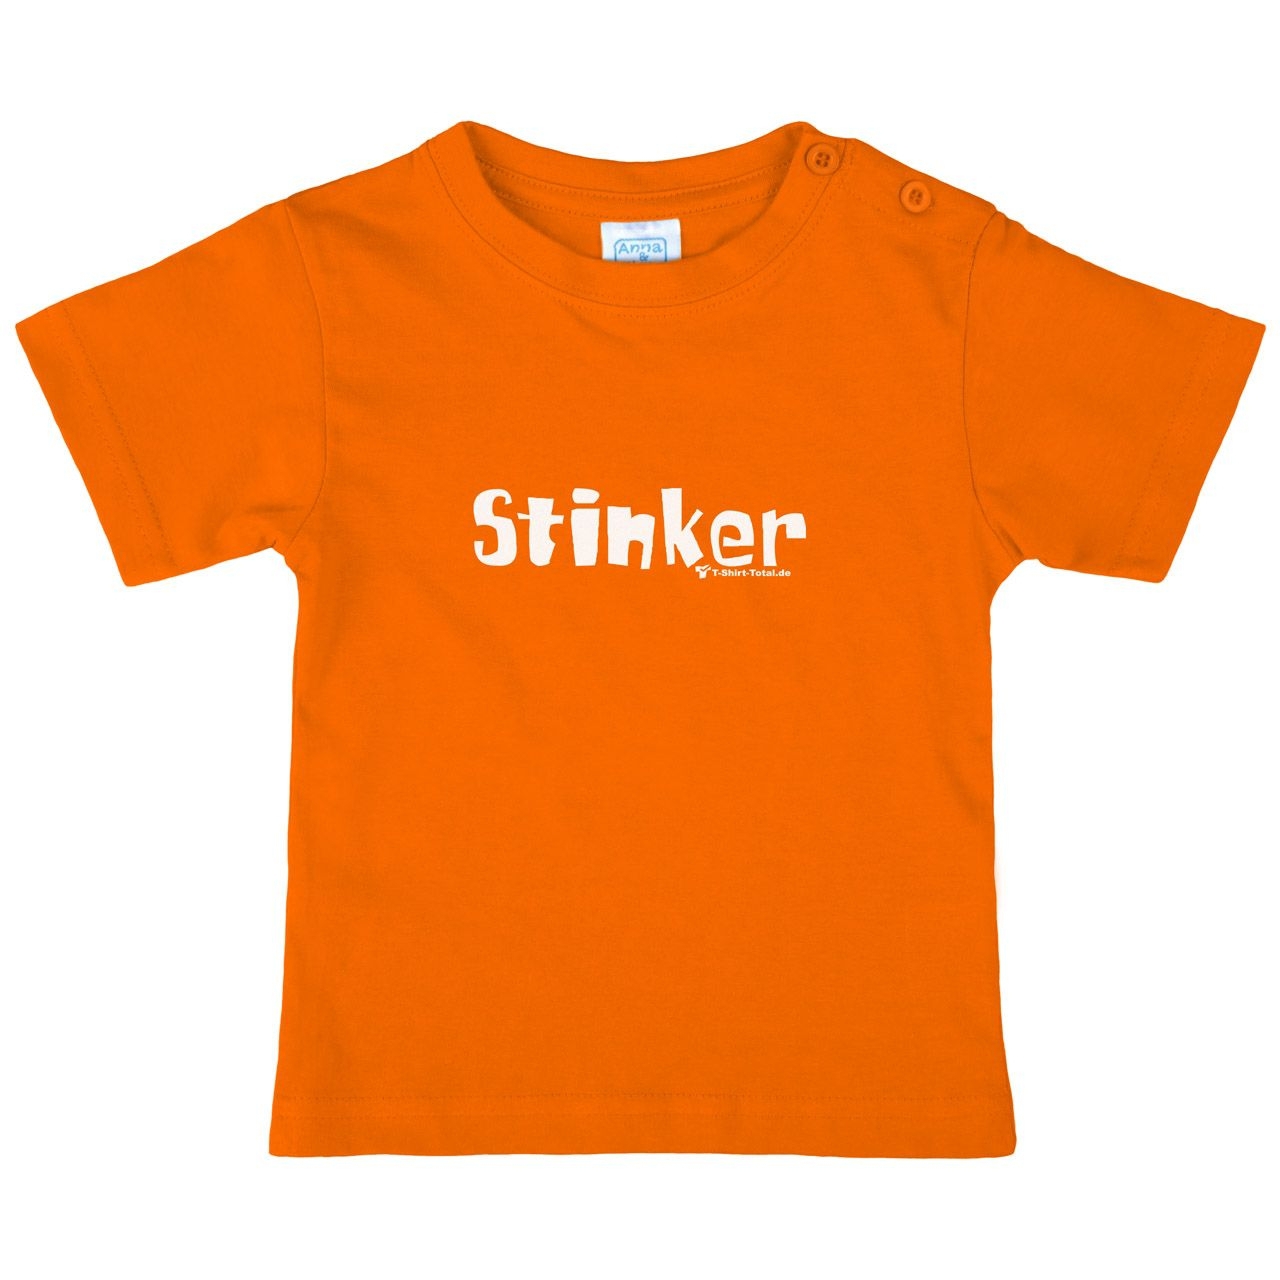 Stinker Kinder T-Shirt orange 80 / 86